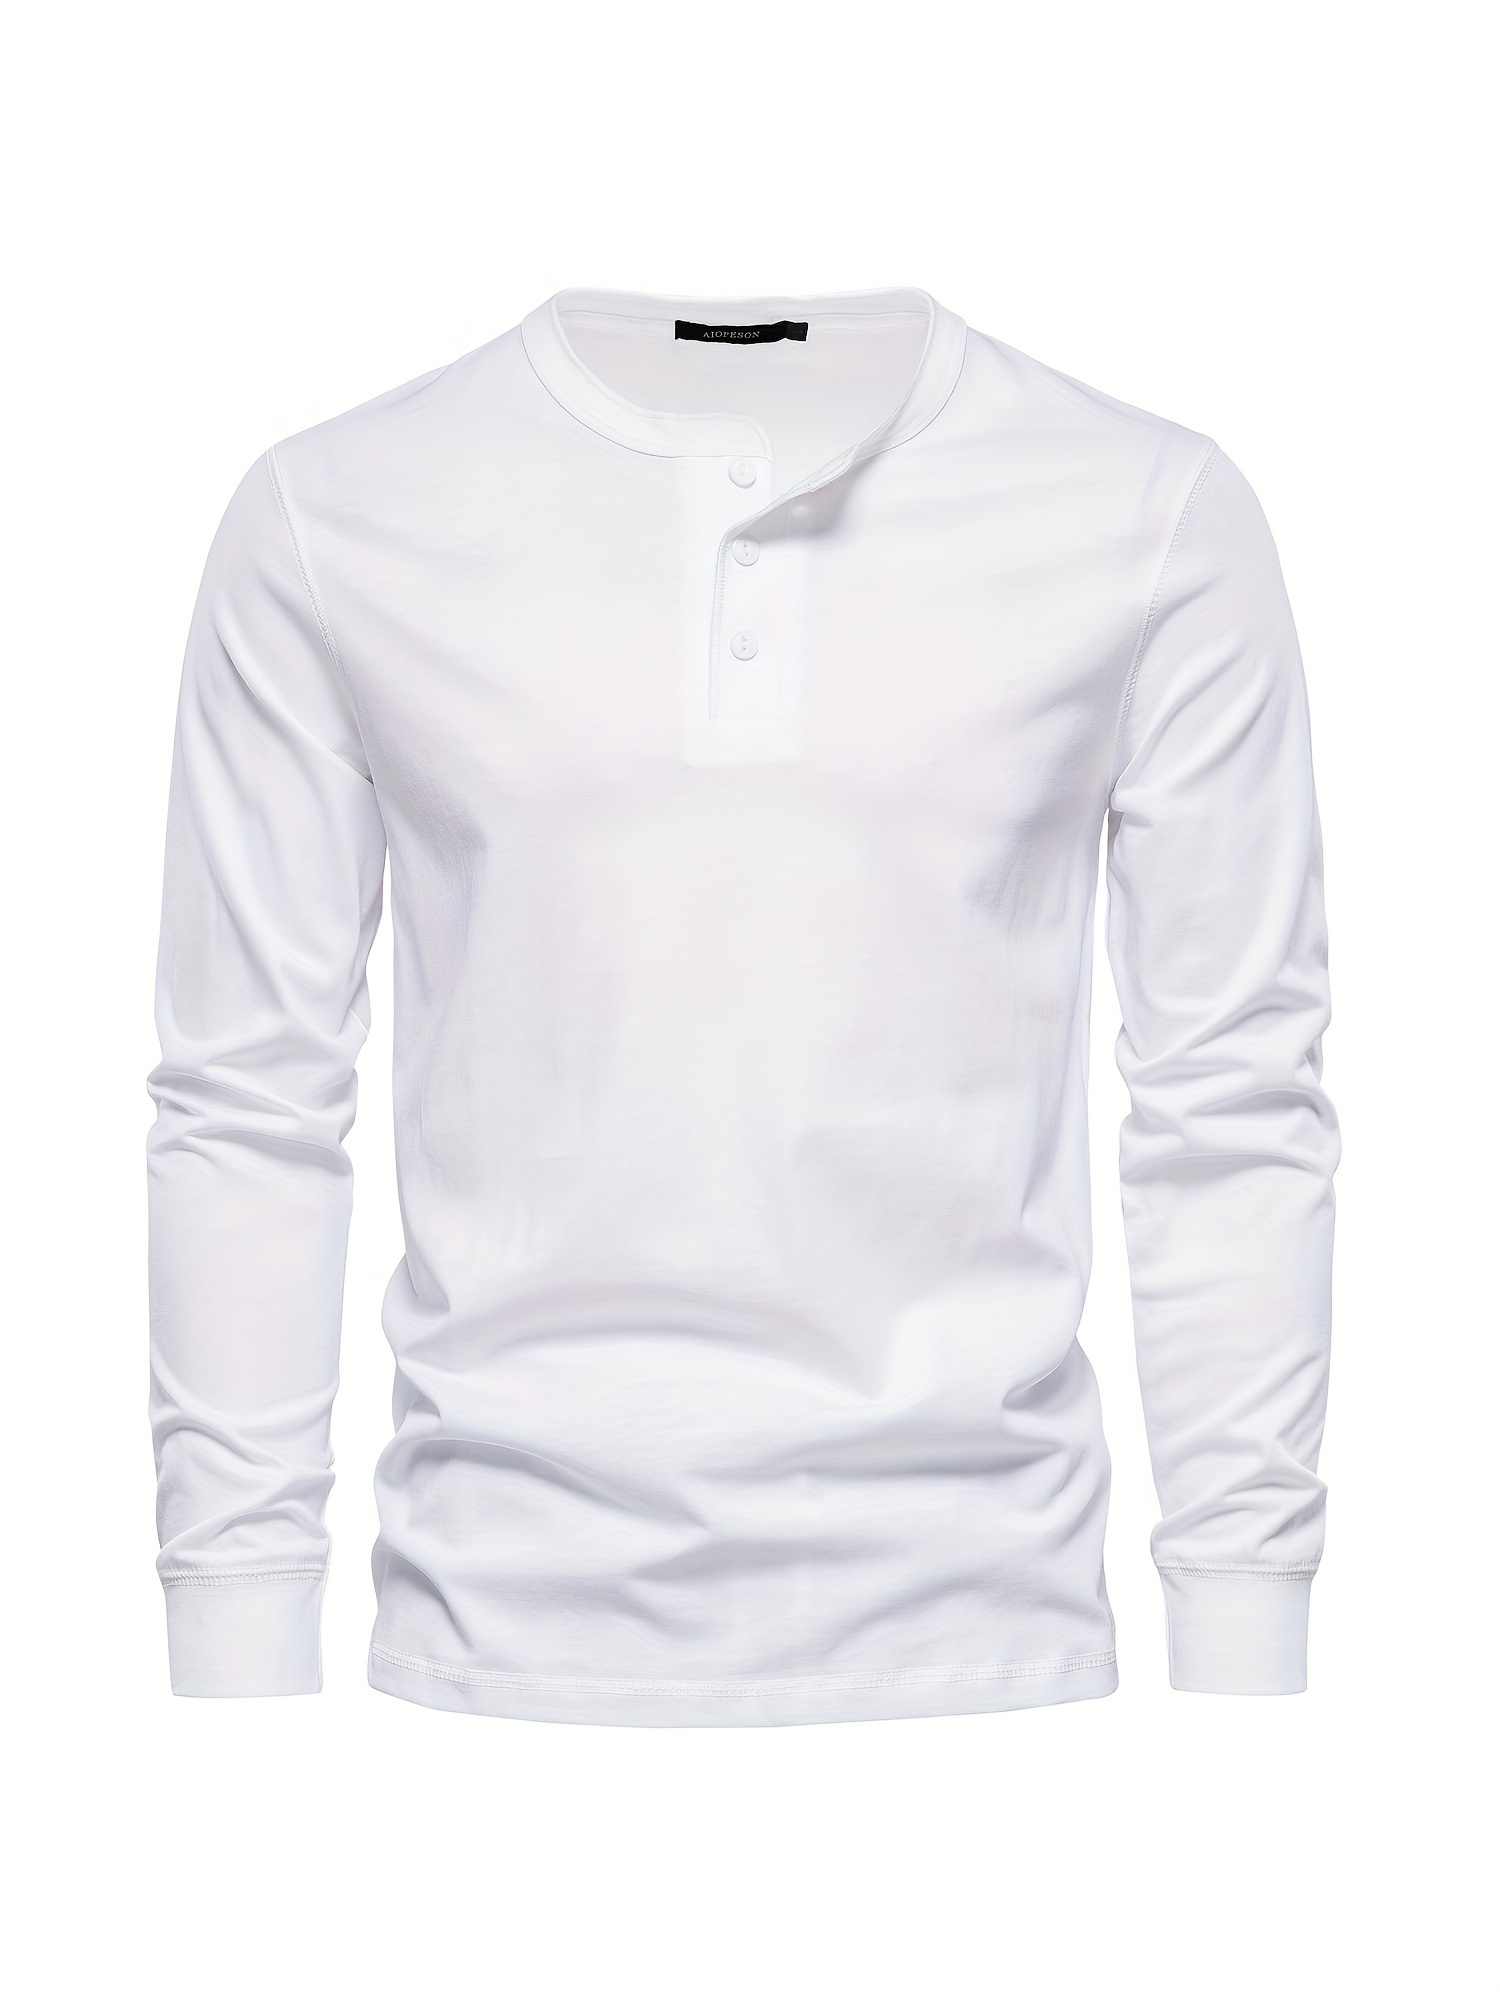 543 MS Men's 3 button Henley Tunic Shirt